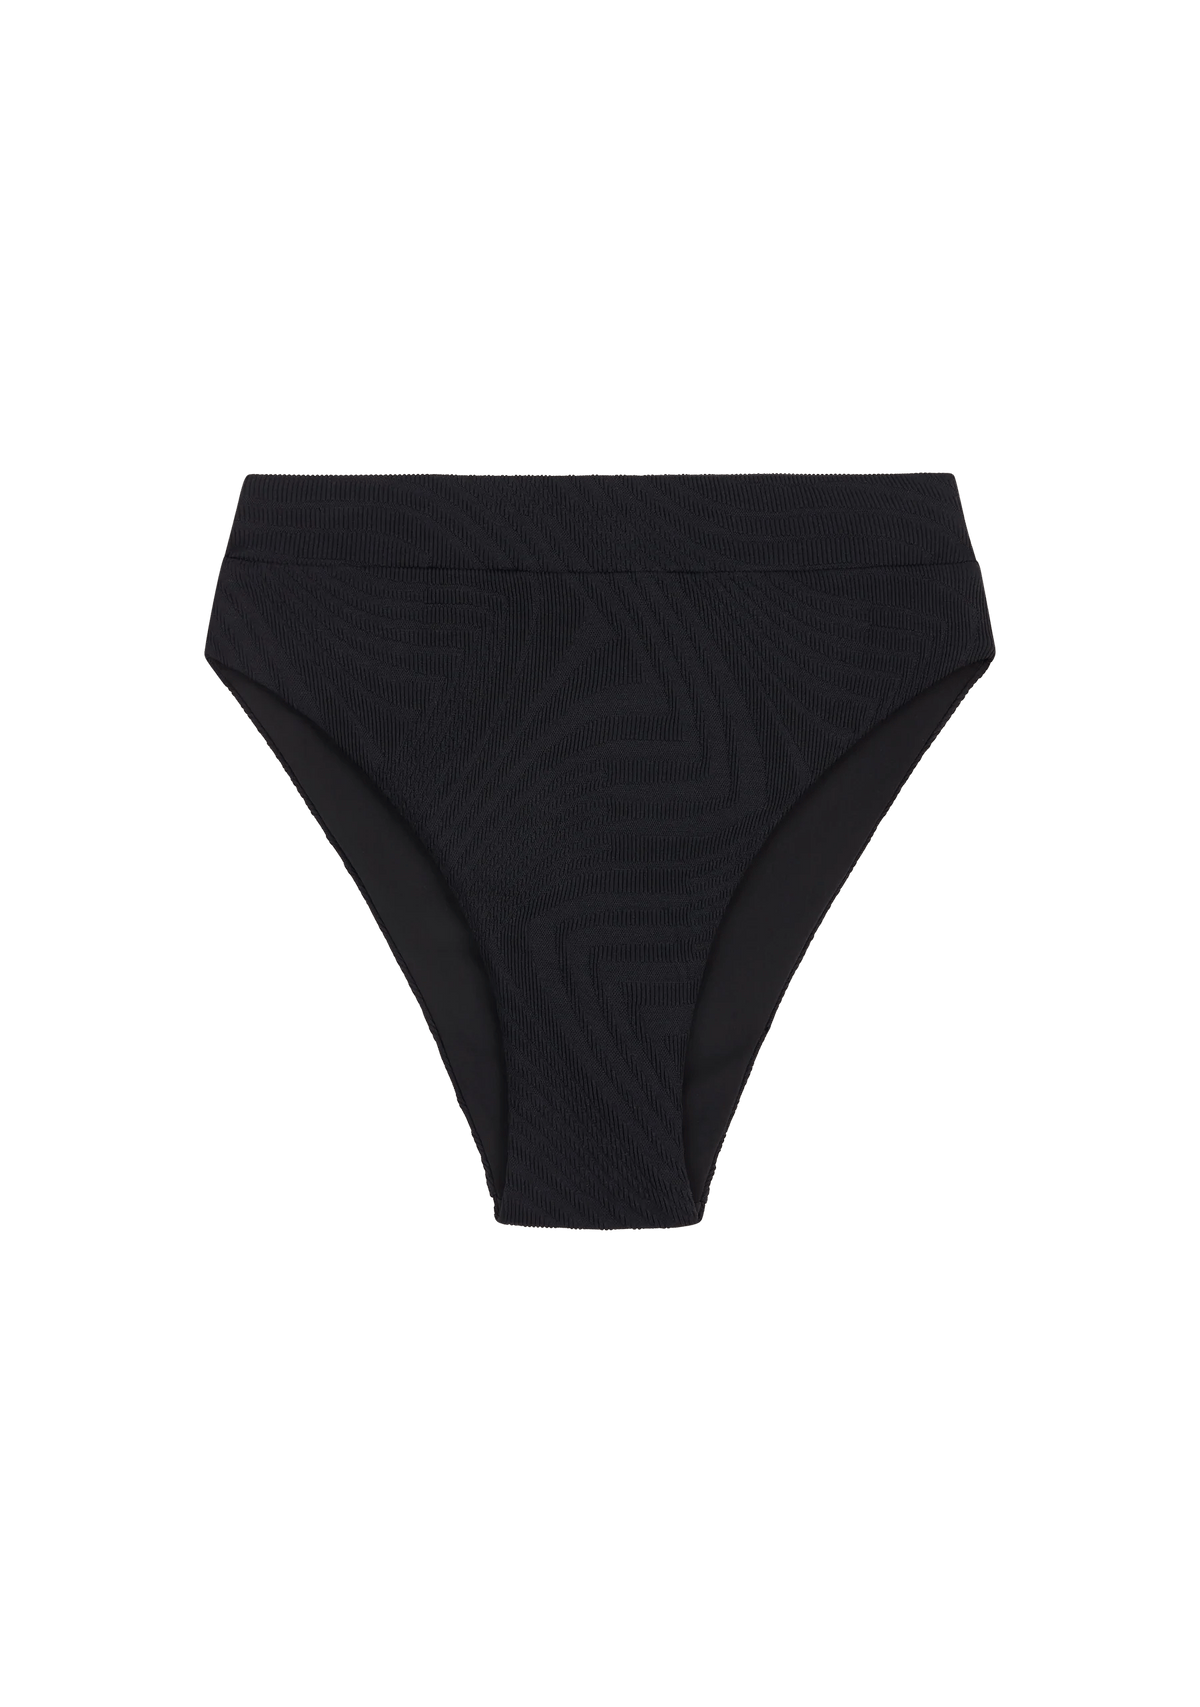 Hubert Bottom - Fella - Splash Swimwear  - Bikini Bottom, fella, Nov22, women swimwear - Splash Swimwear 